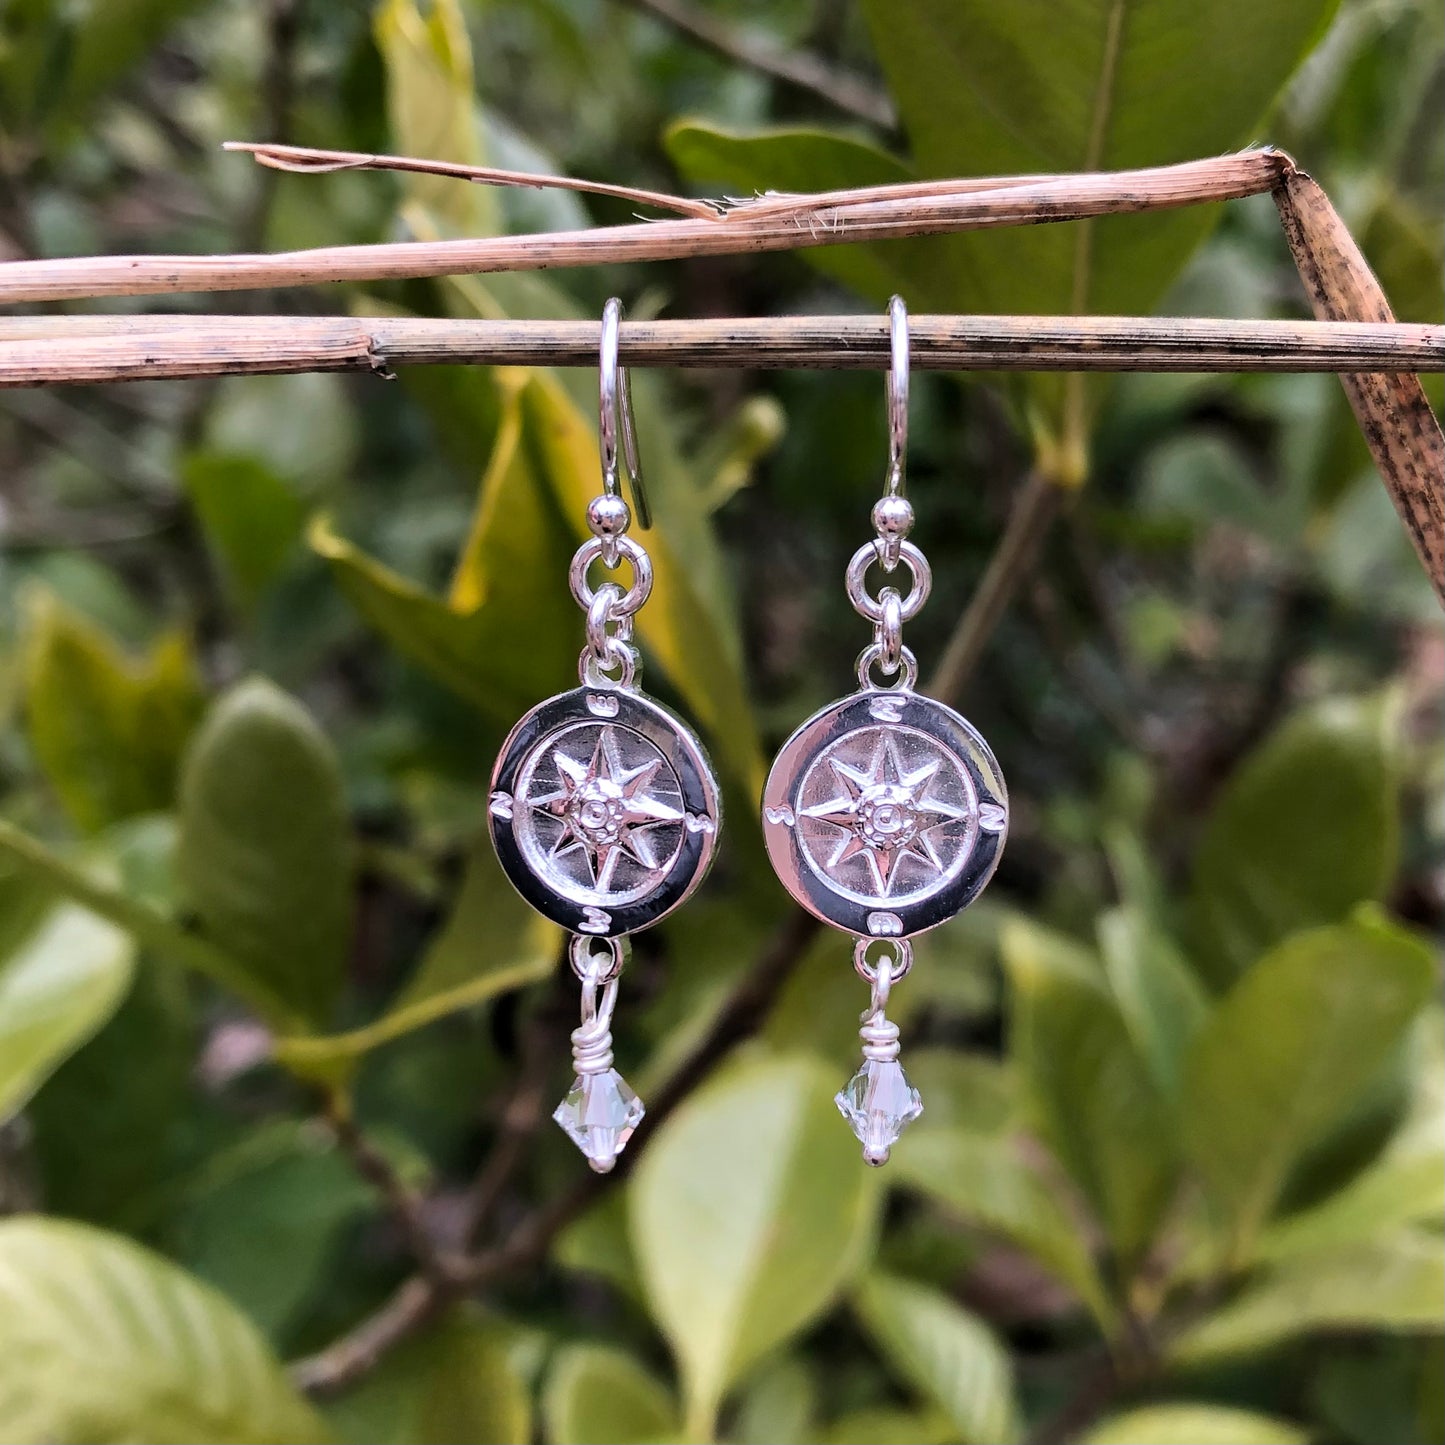 Silver Compass Earrings w/Crystal Drops